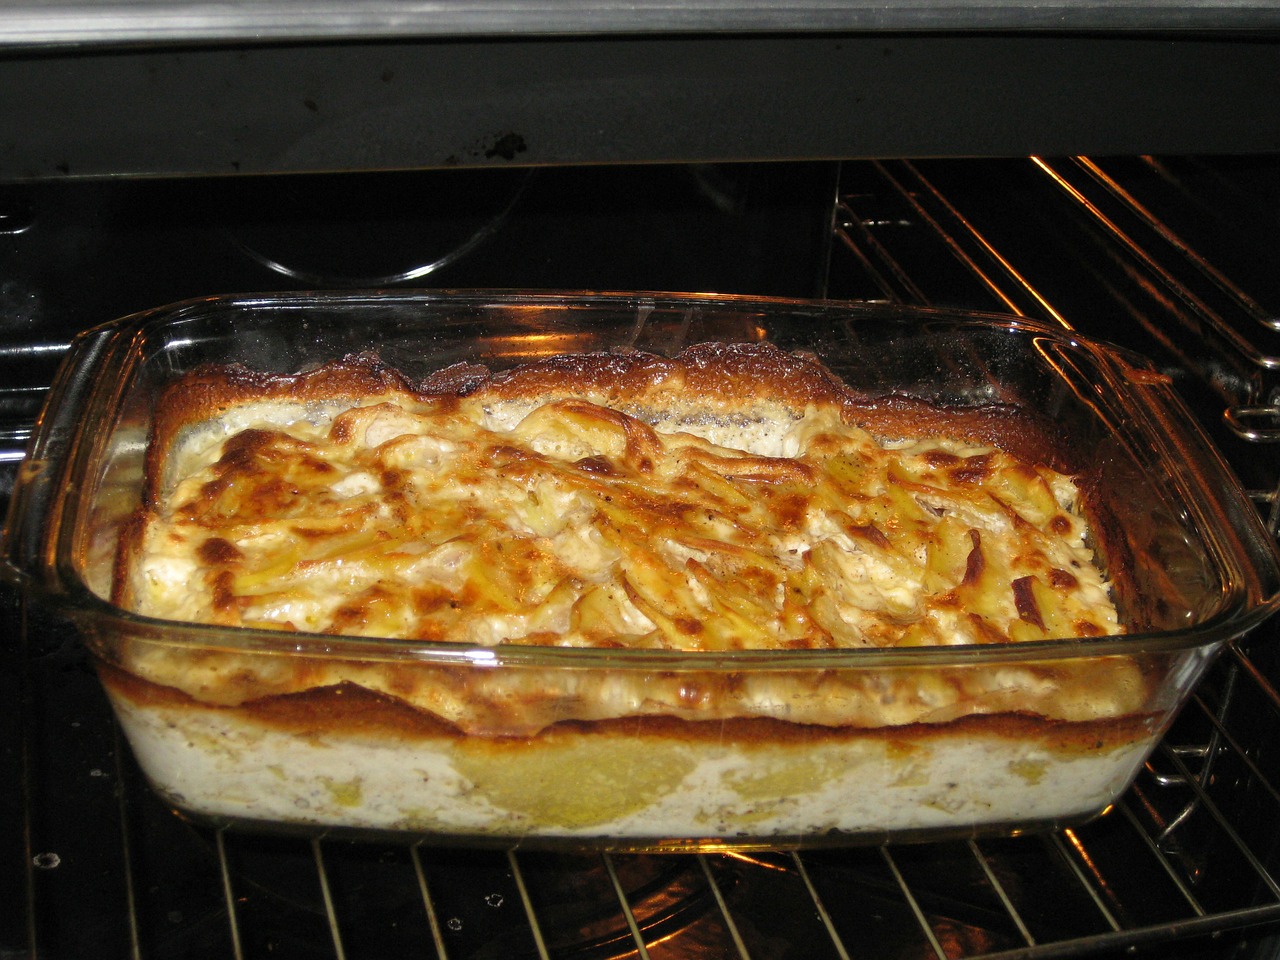 Microwave "Roasted" Potato Wedges